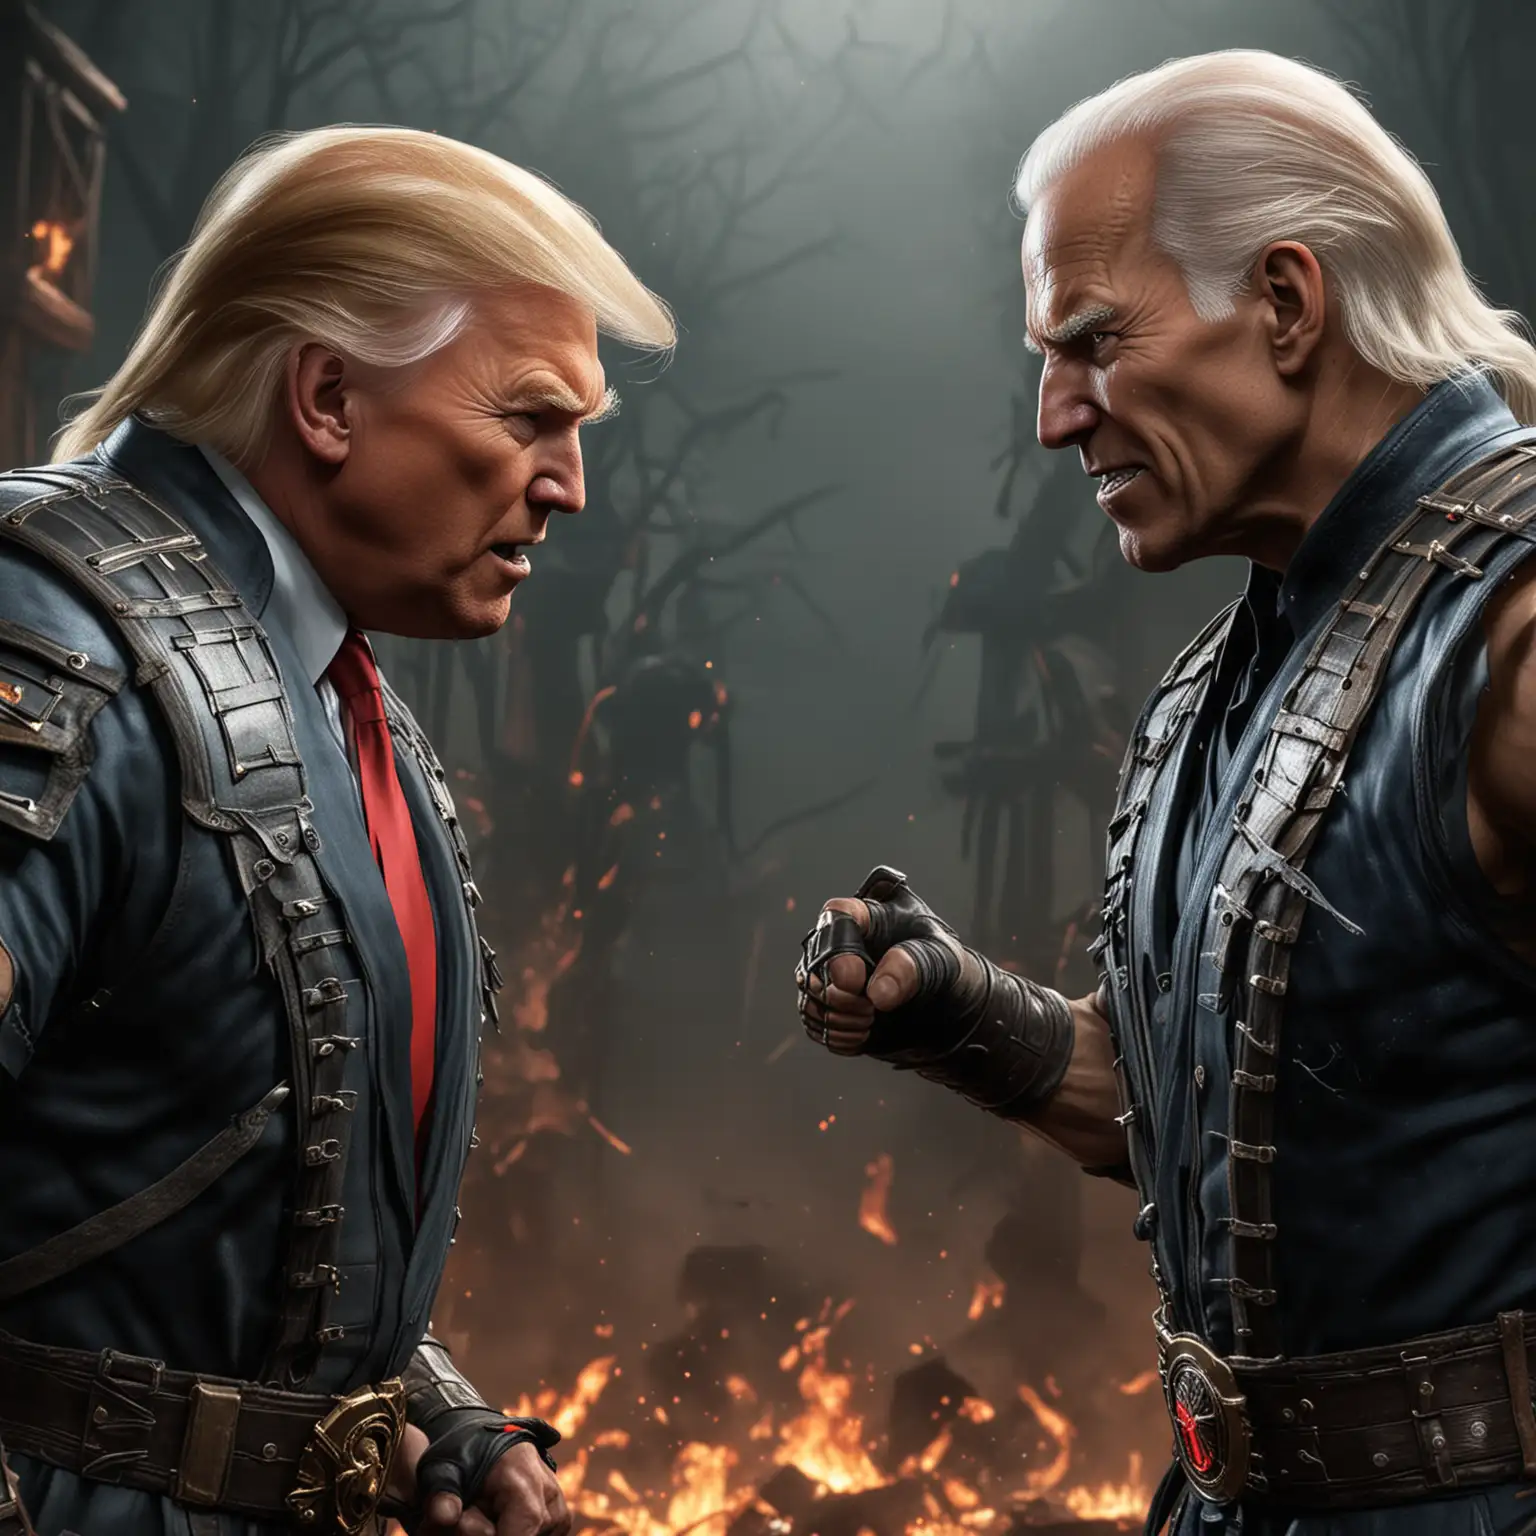 Mortal Kombat, Trump V Biden, fatality